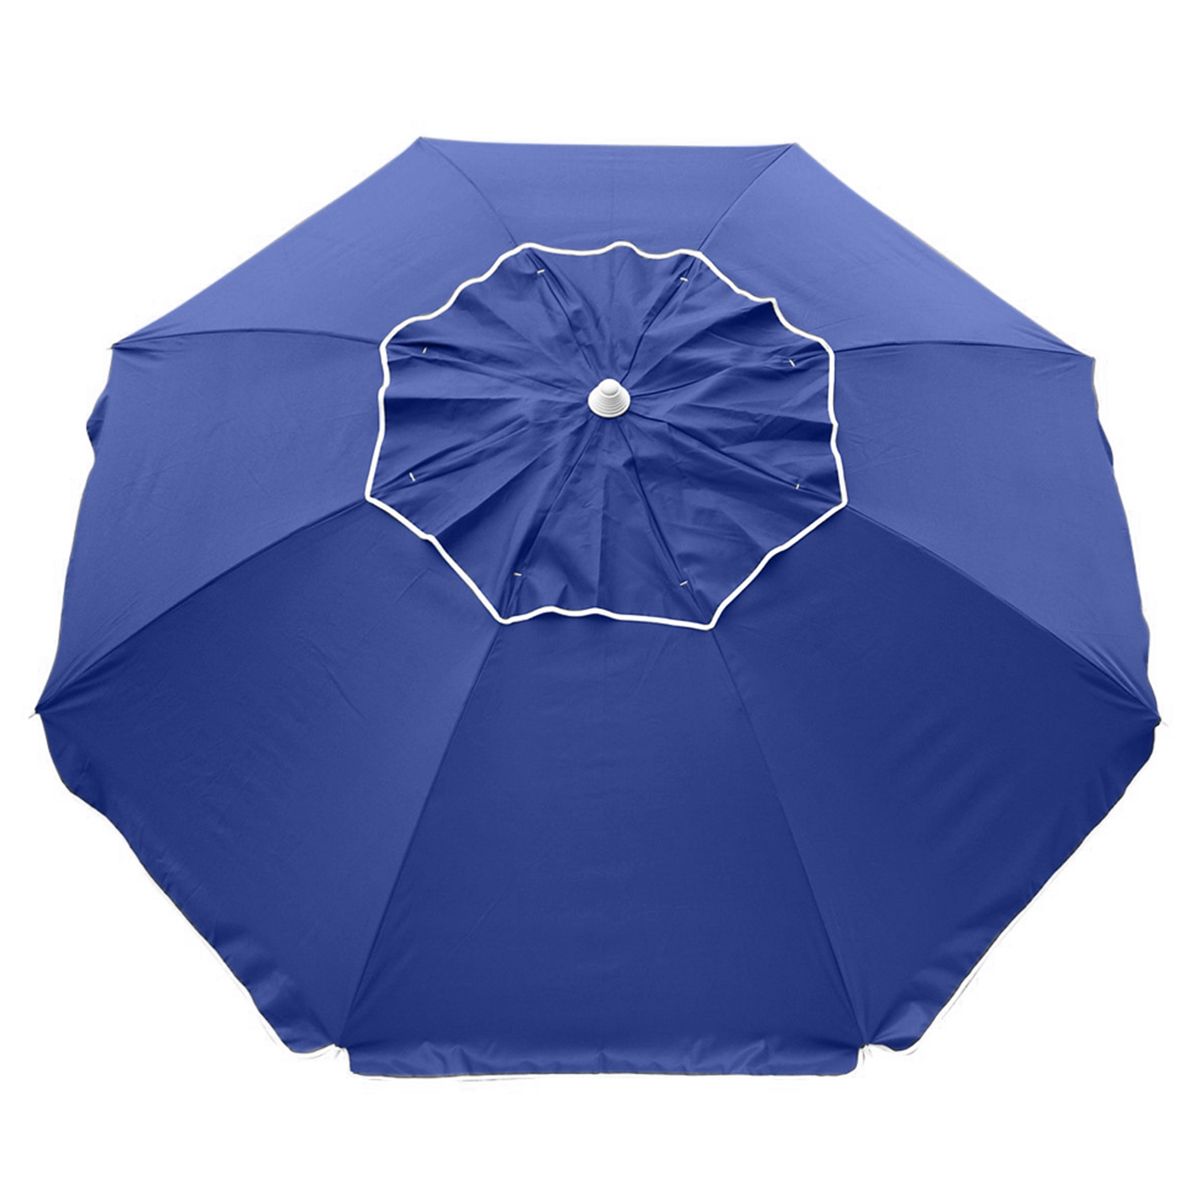 Beachkit Beachcomber Beach Umbrella - 210cm